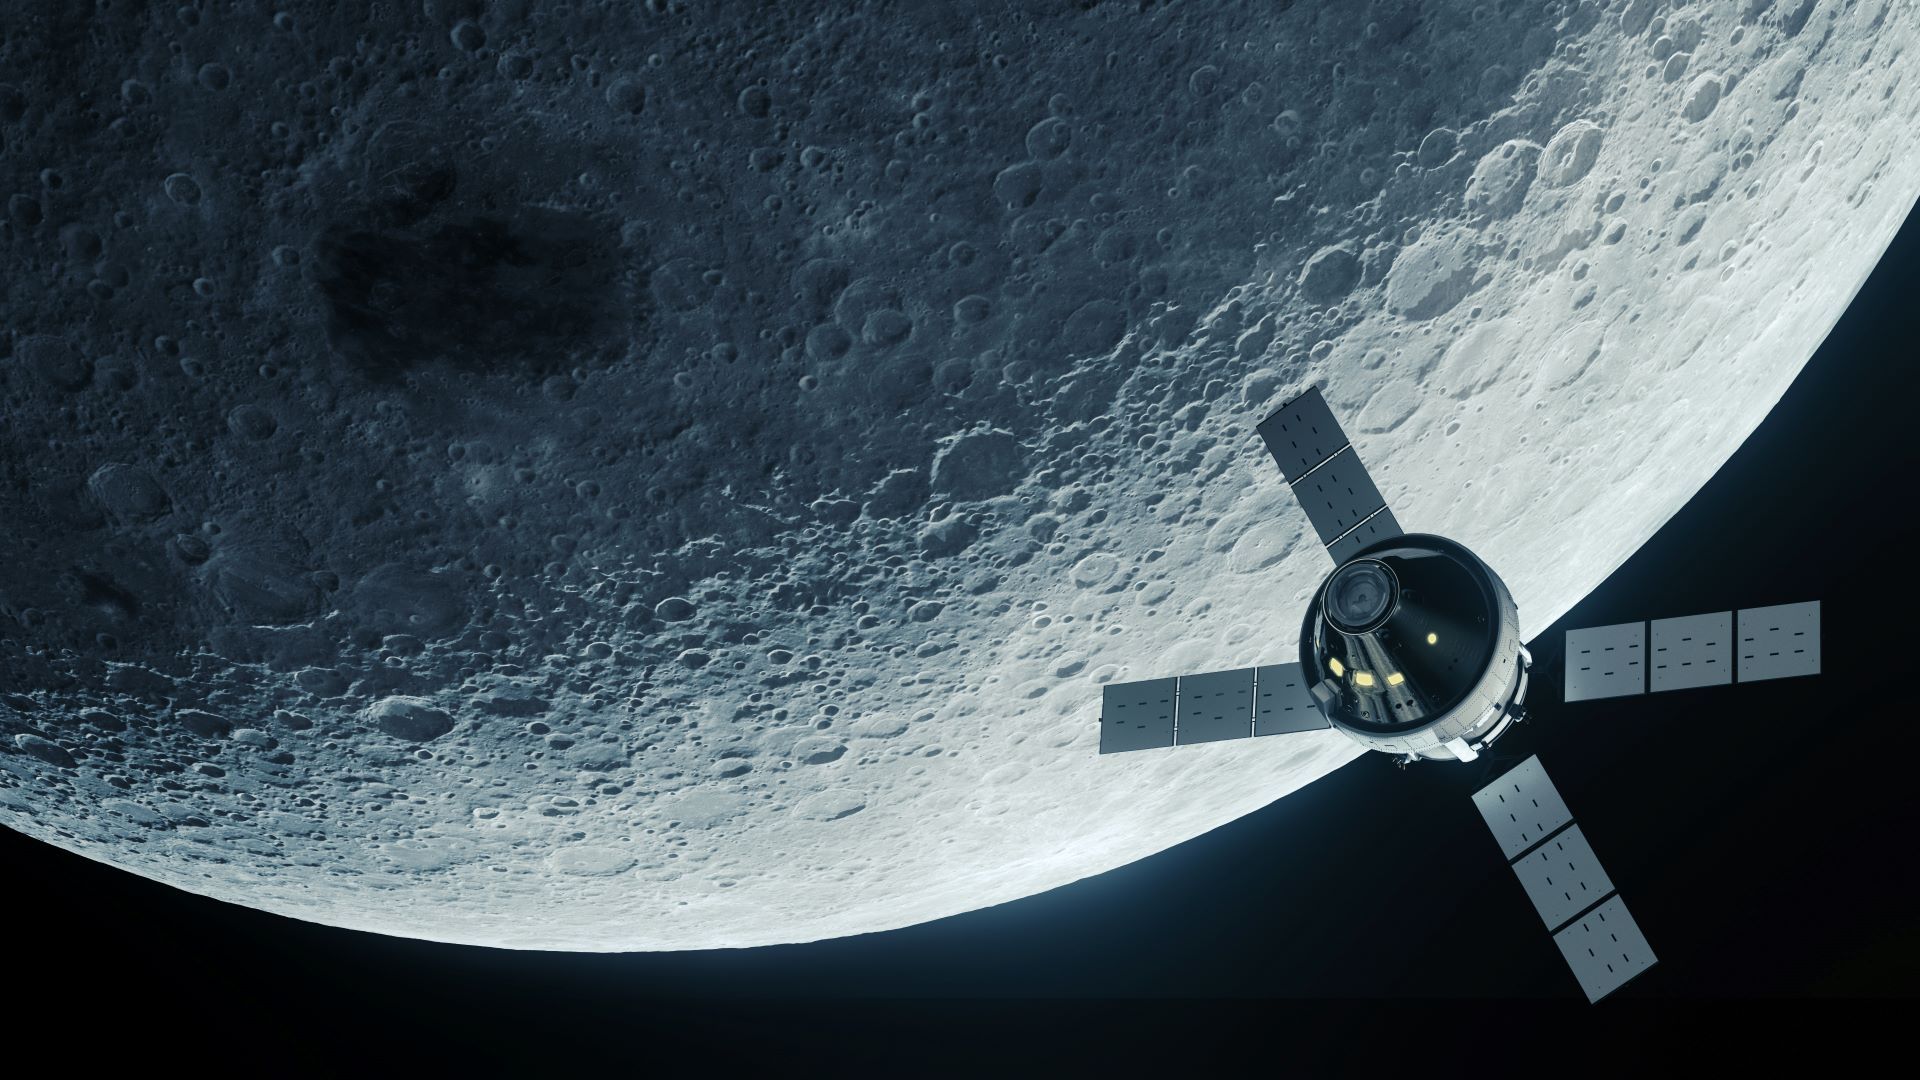 Moons satellite. Космический корабль Ореон. Artemis 1 Orion. Космический корабль Орион НАСА. Лунный корабль Орион.